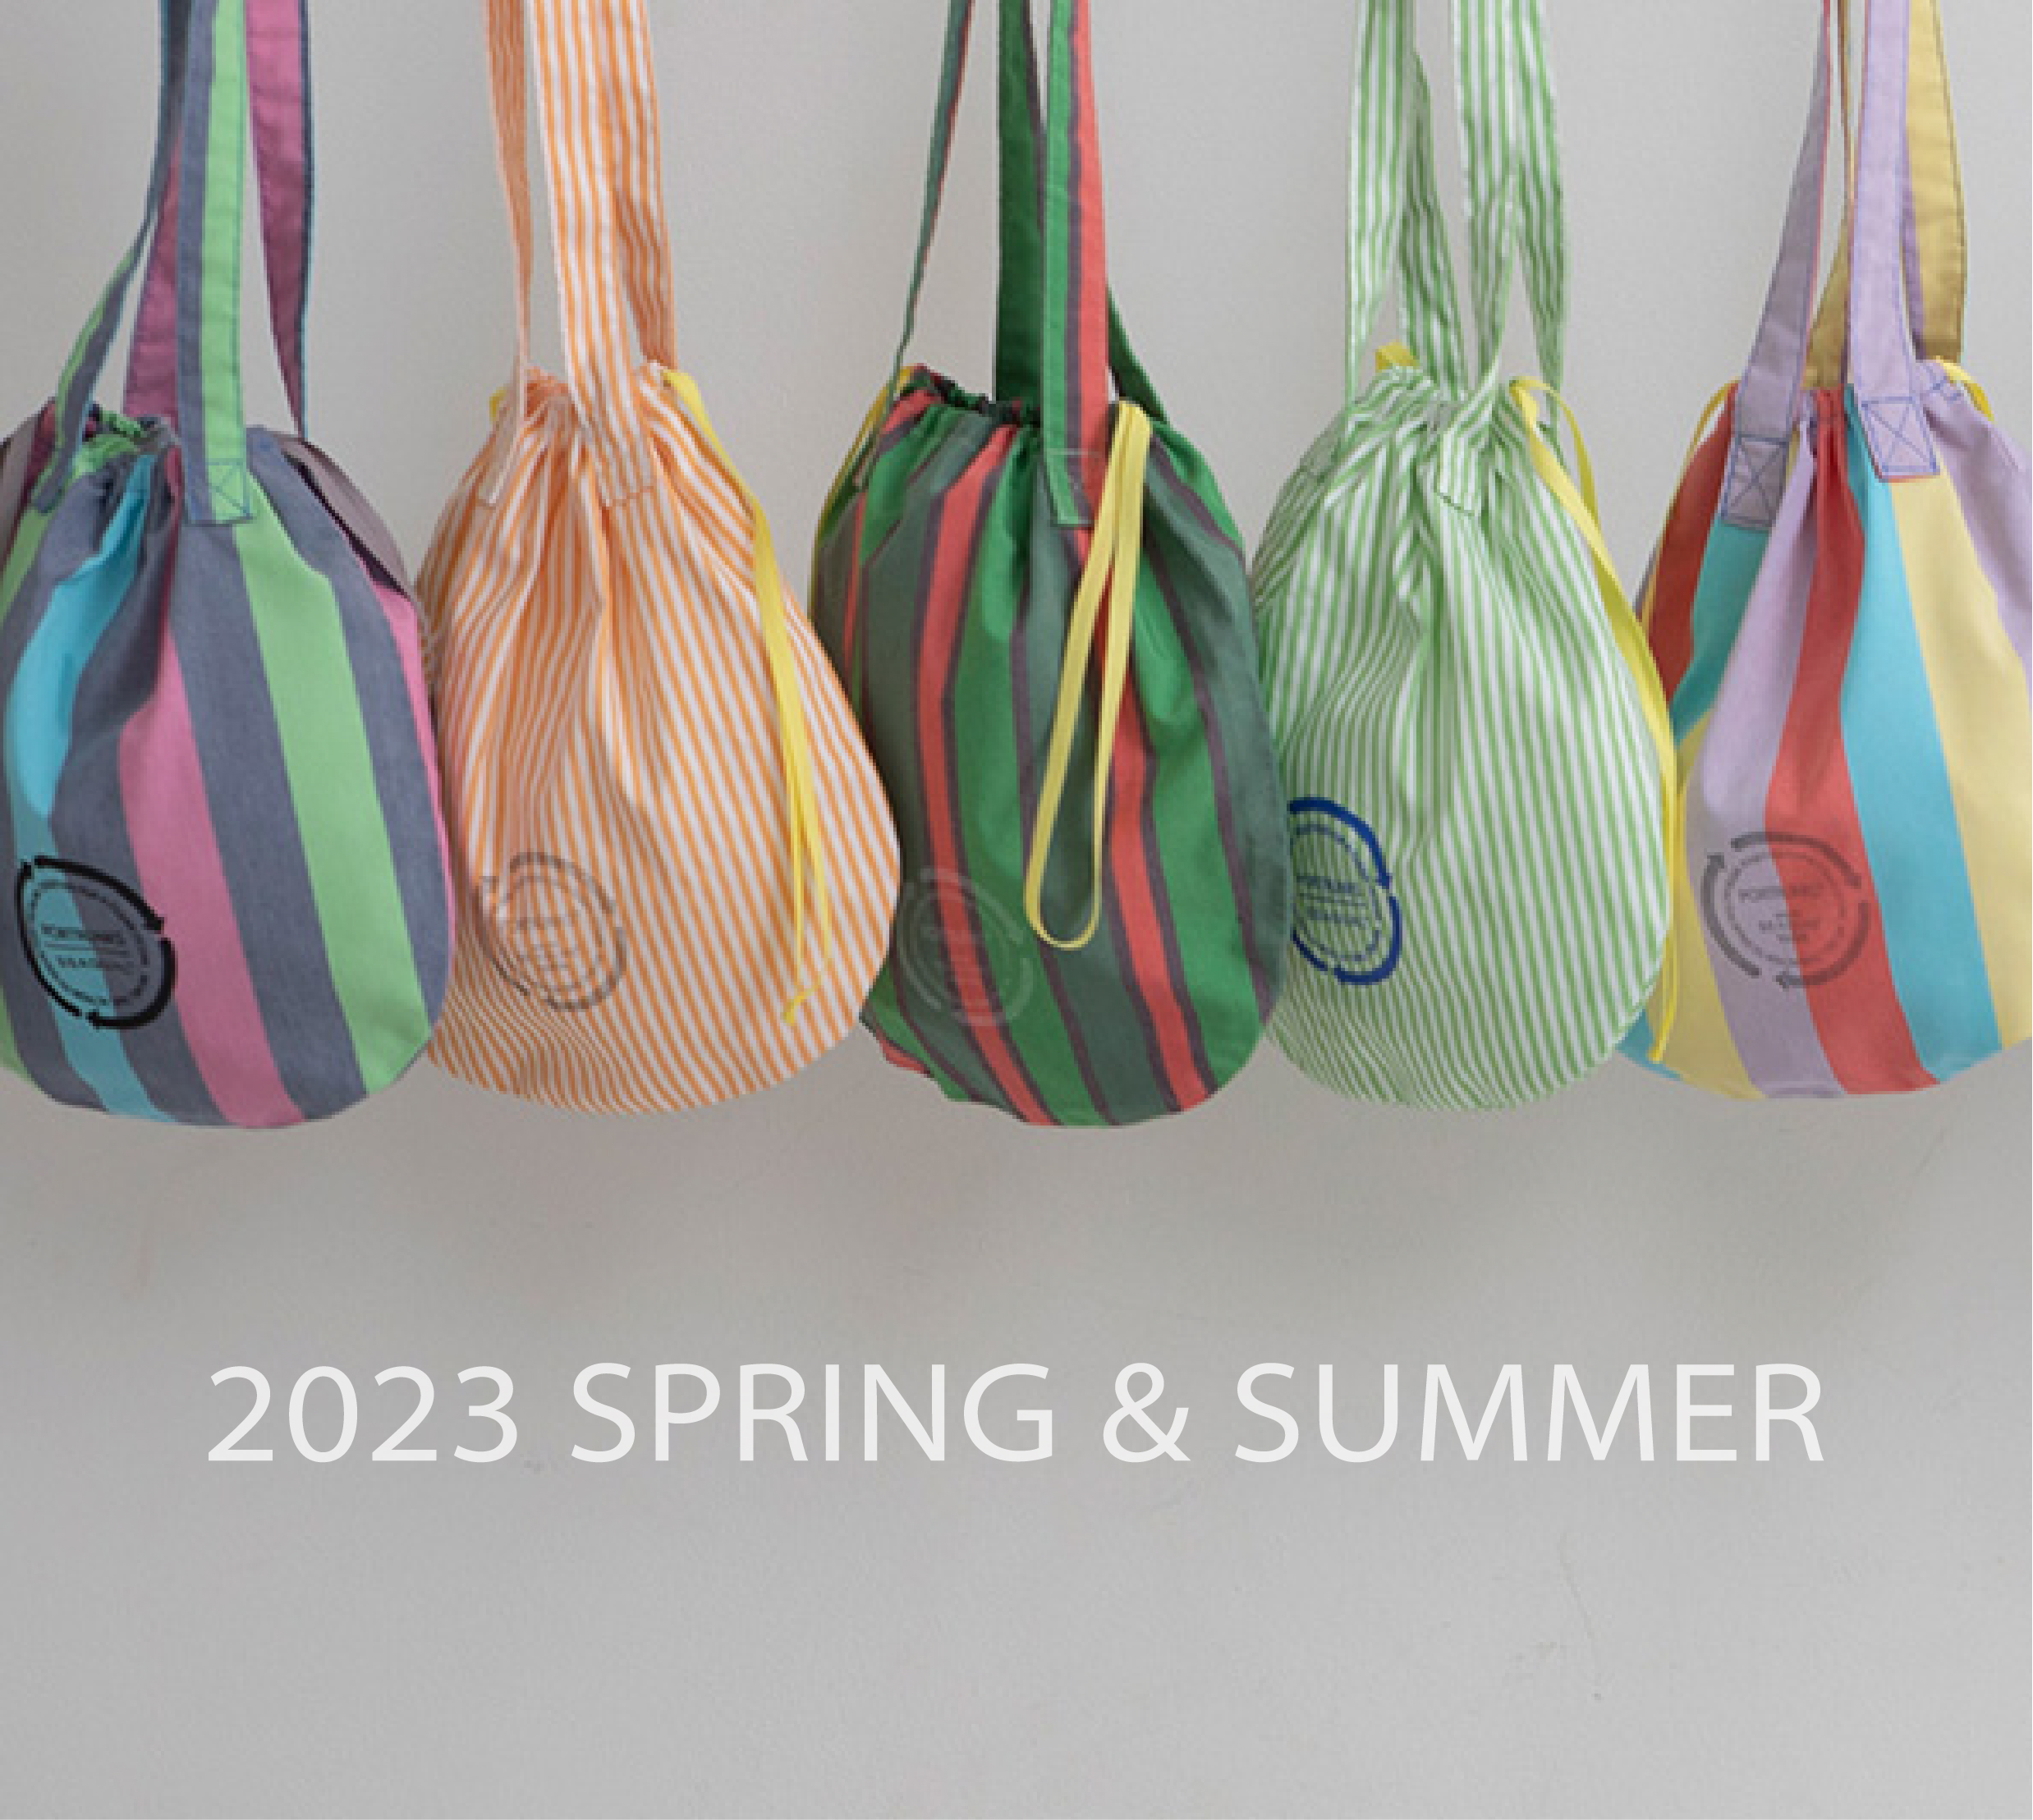 2023 SPRING&SUMMER  オンラインショップにて10/19 - 11/6の日程で予約販売を受付中です！